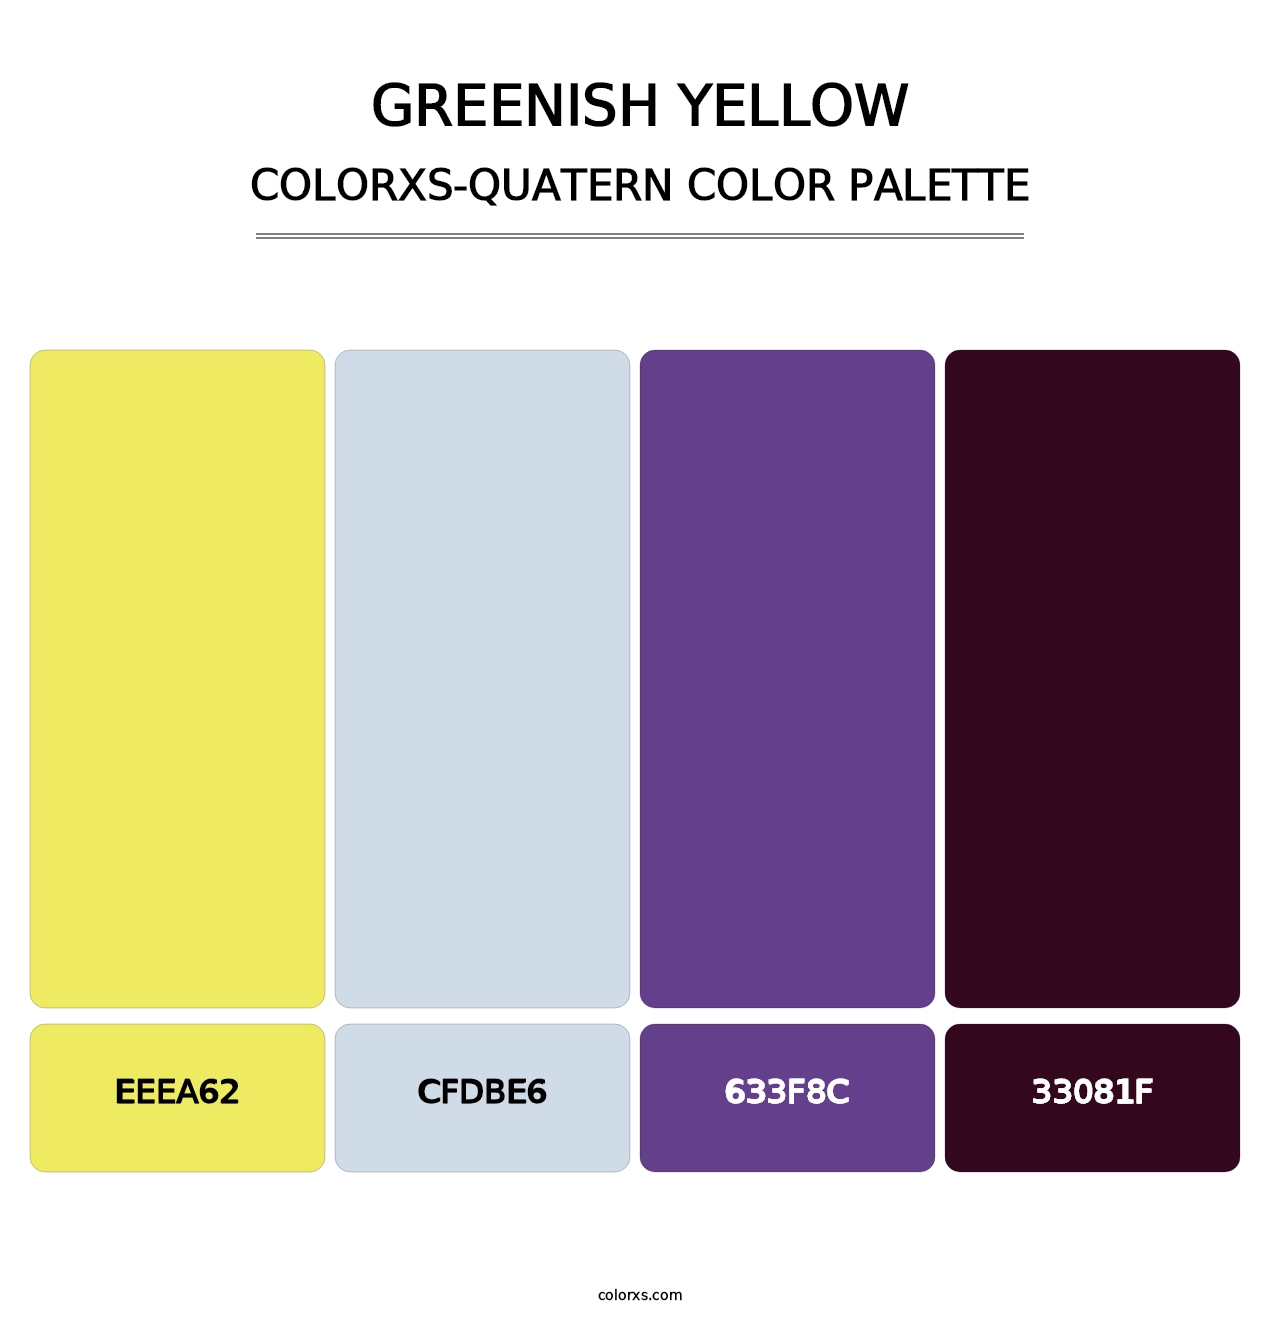 Greenish Yellow - Colorxs Quatern Palette